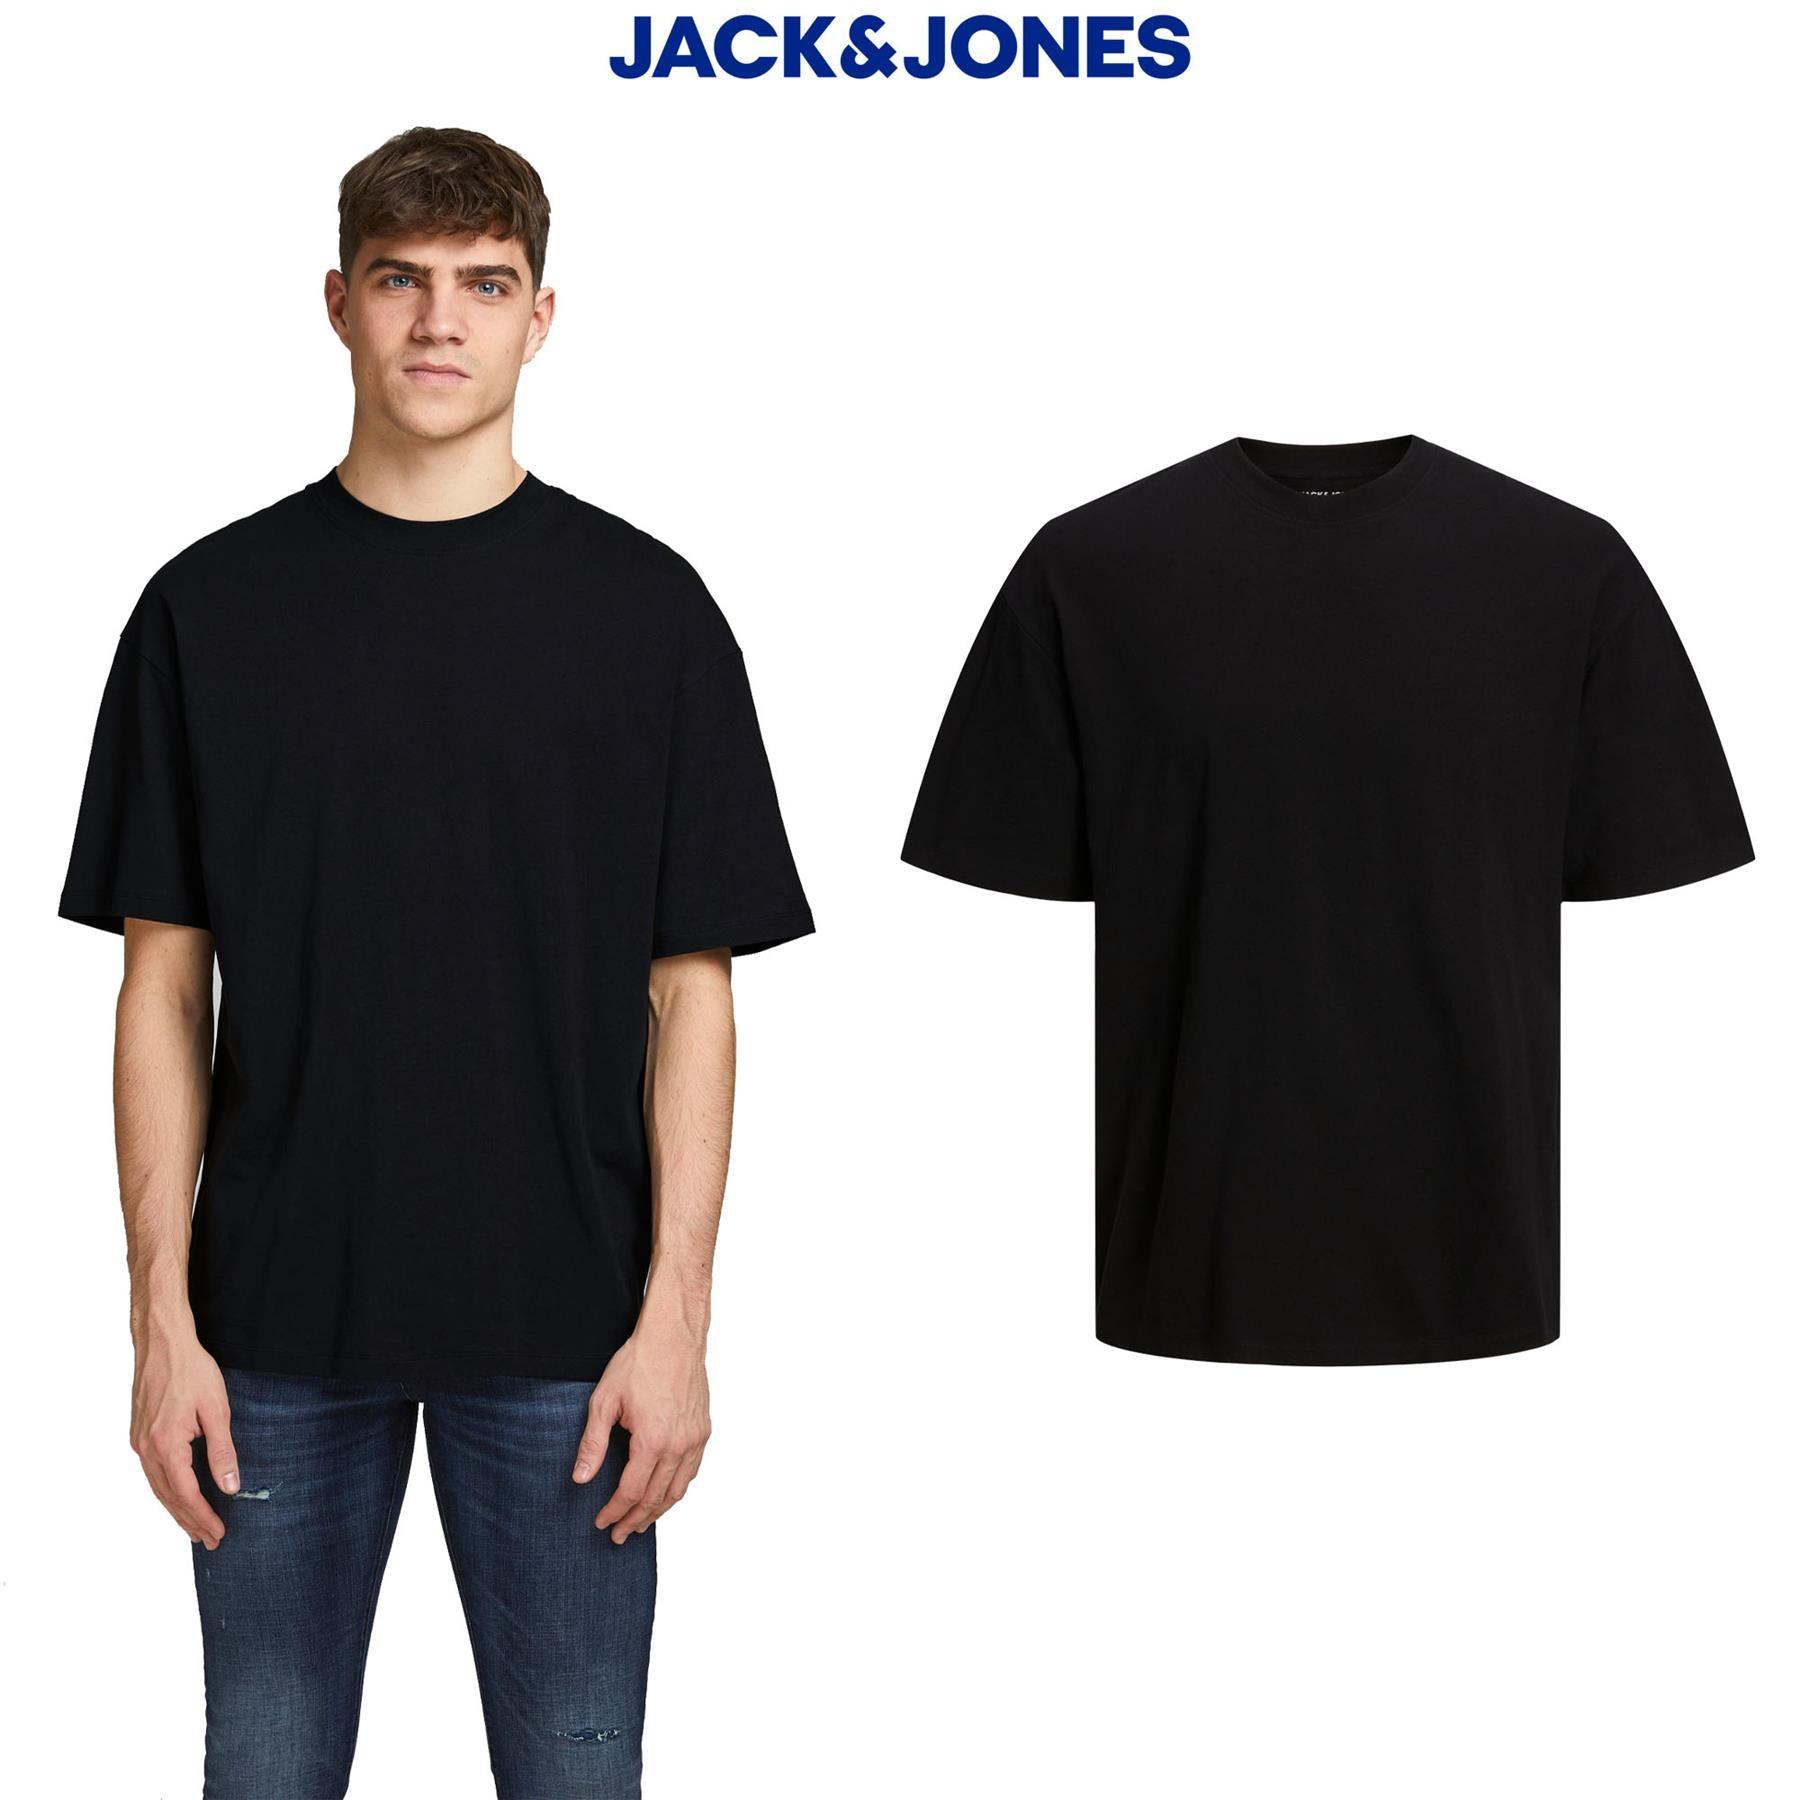 Jack & Jones Mens 'Brink' T-Shirt in Black